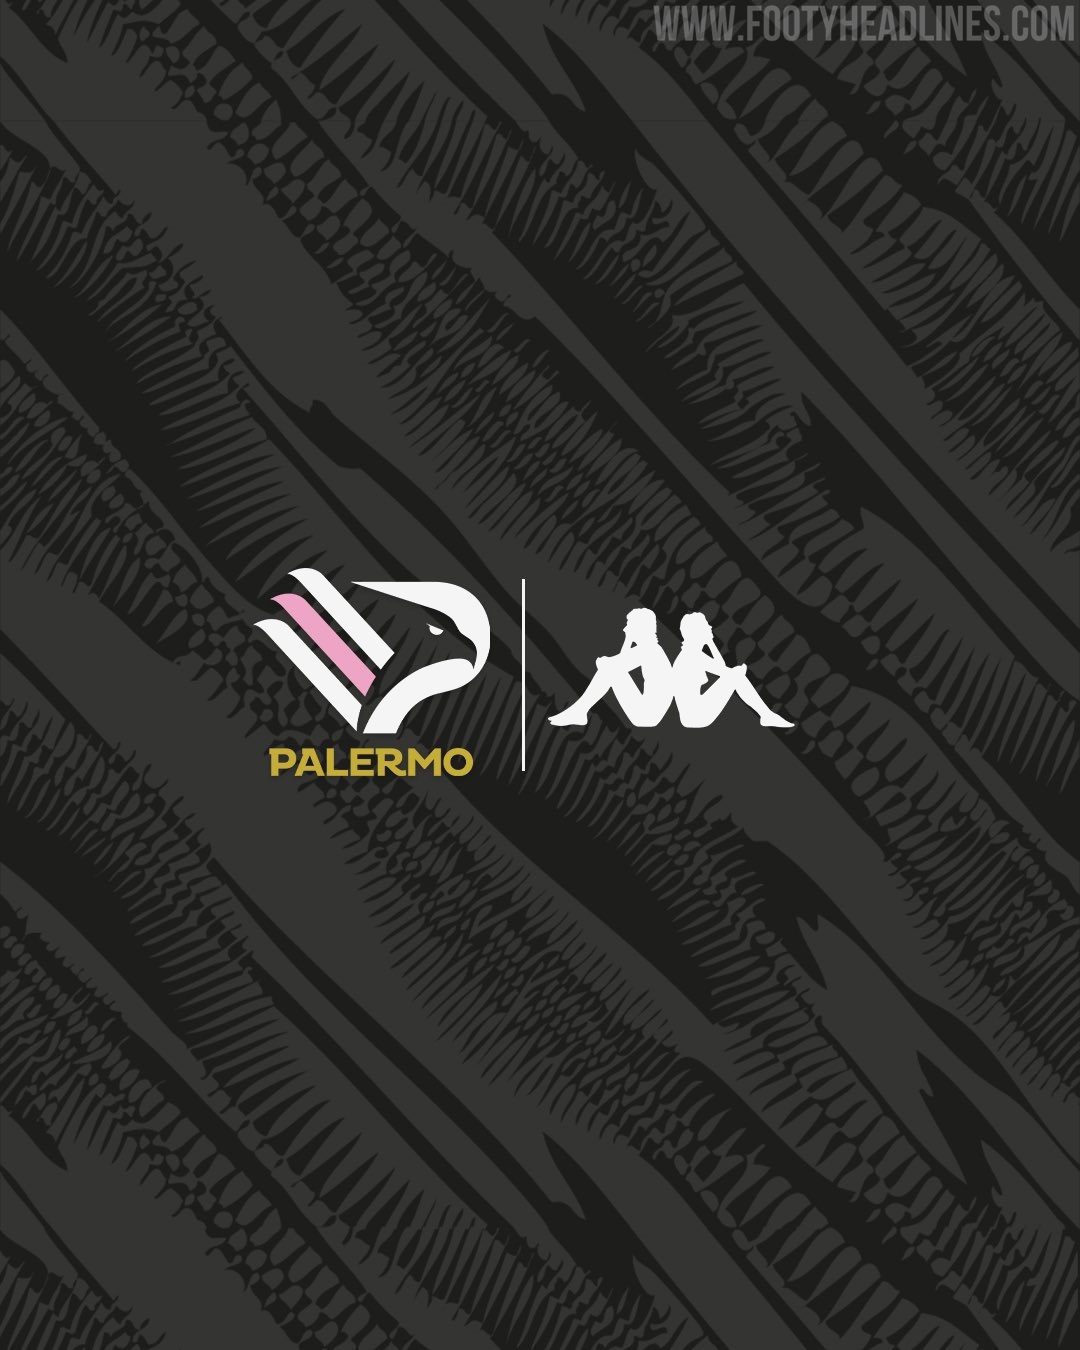 All-New SSC Palermo Logo Revealed + Kappa Kit Deal - Footy Headlines